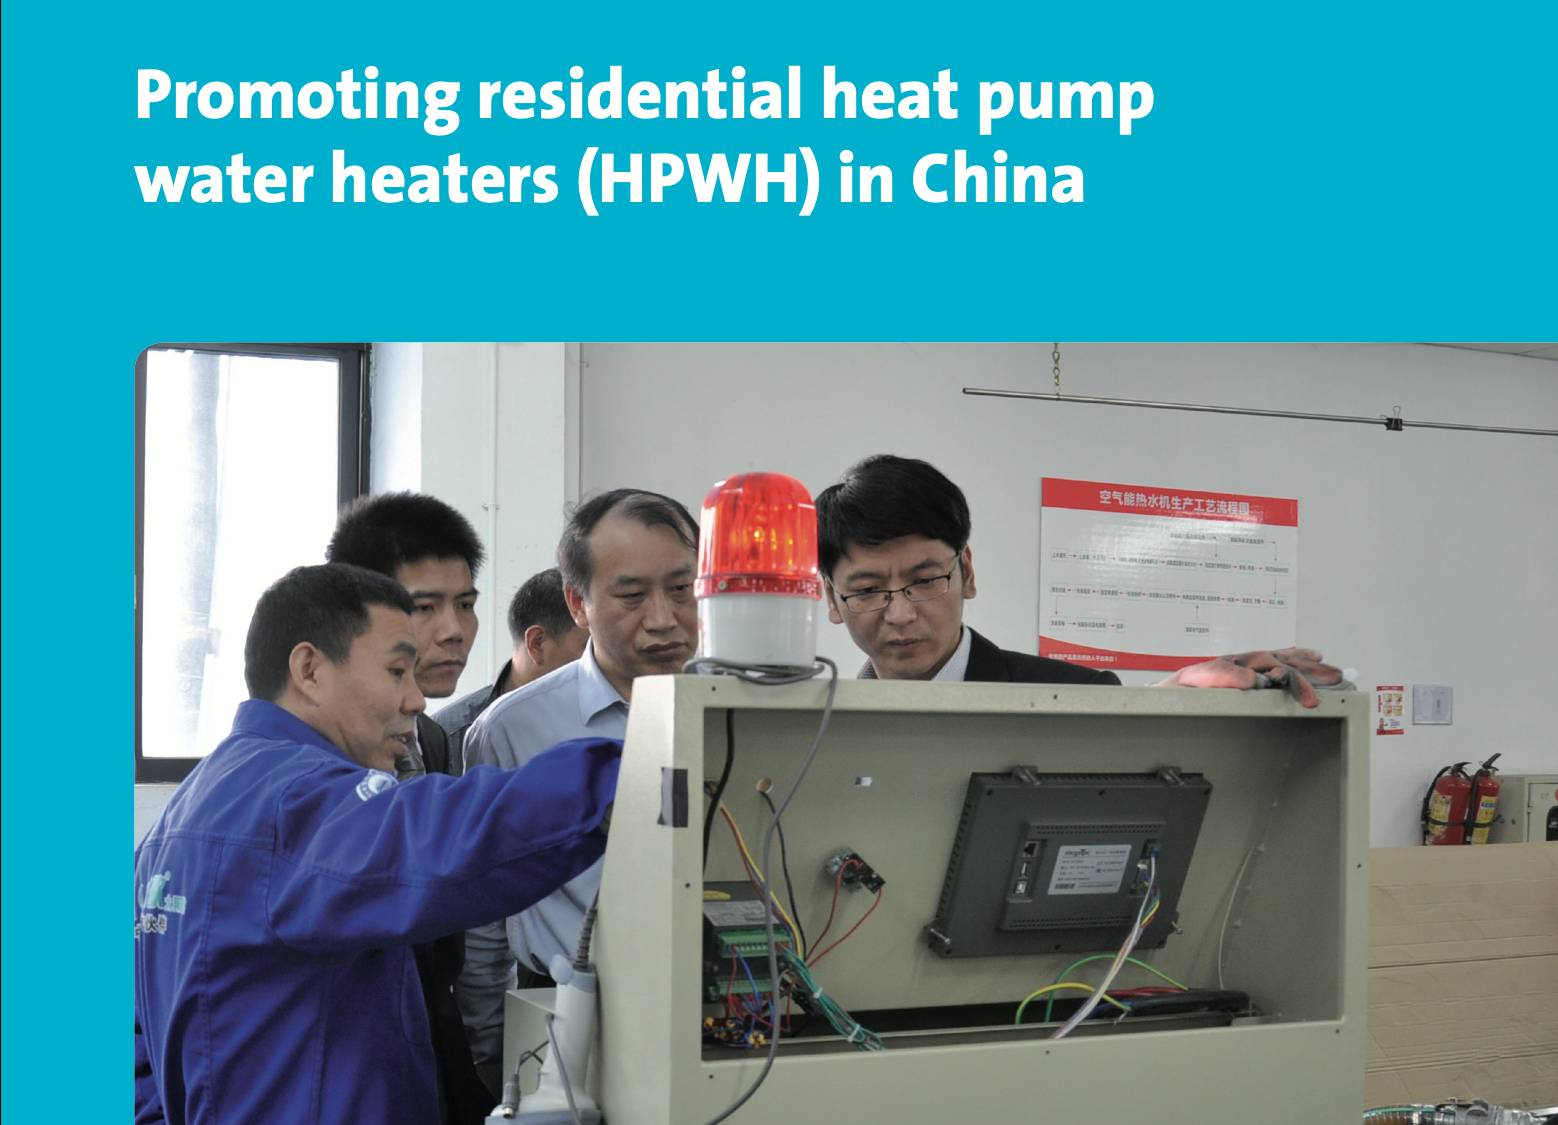 Impact Sheet: China Heat Pump Water Heater Challenge